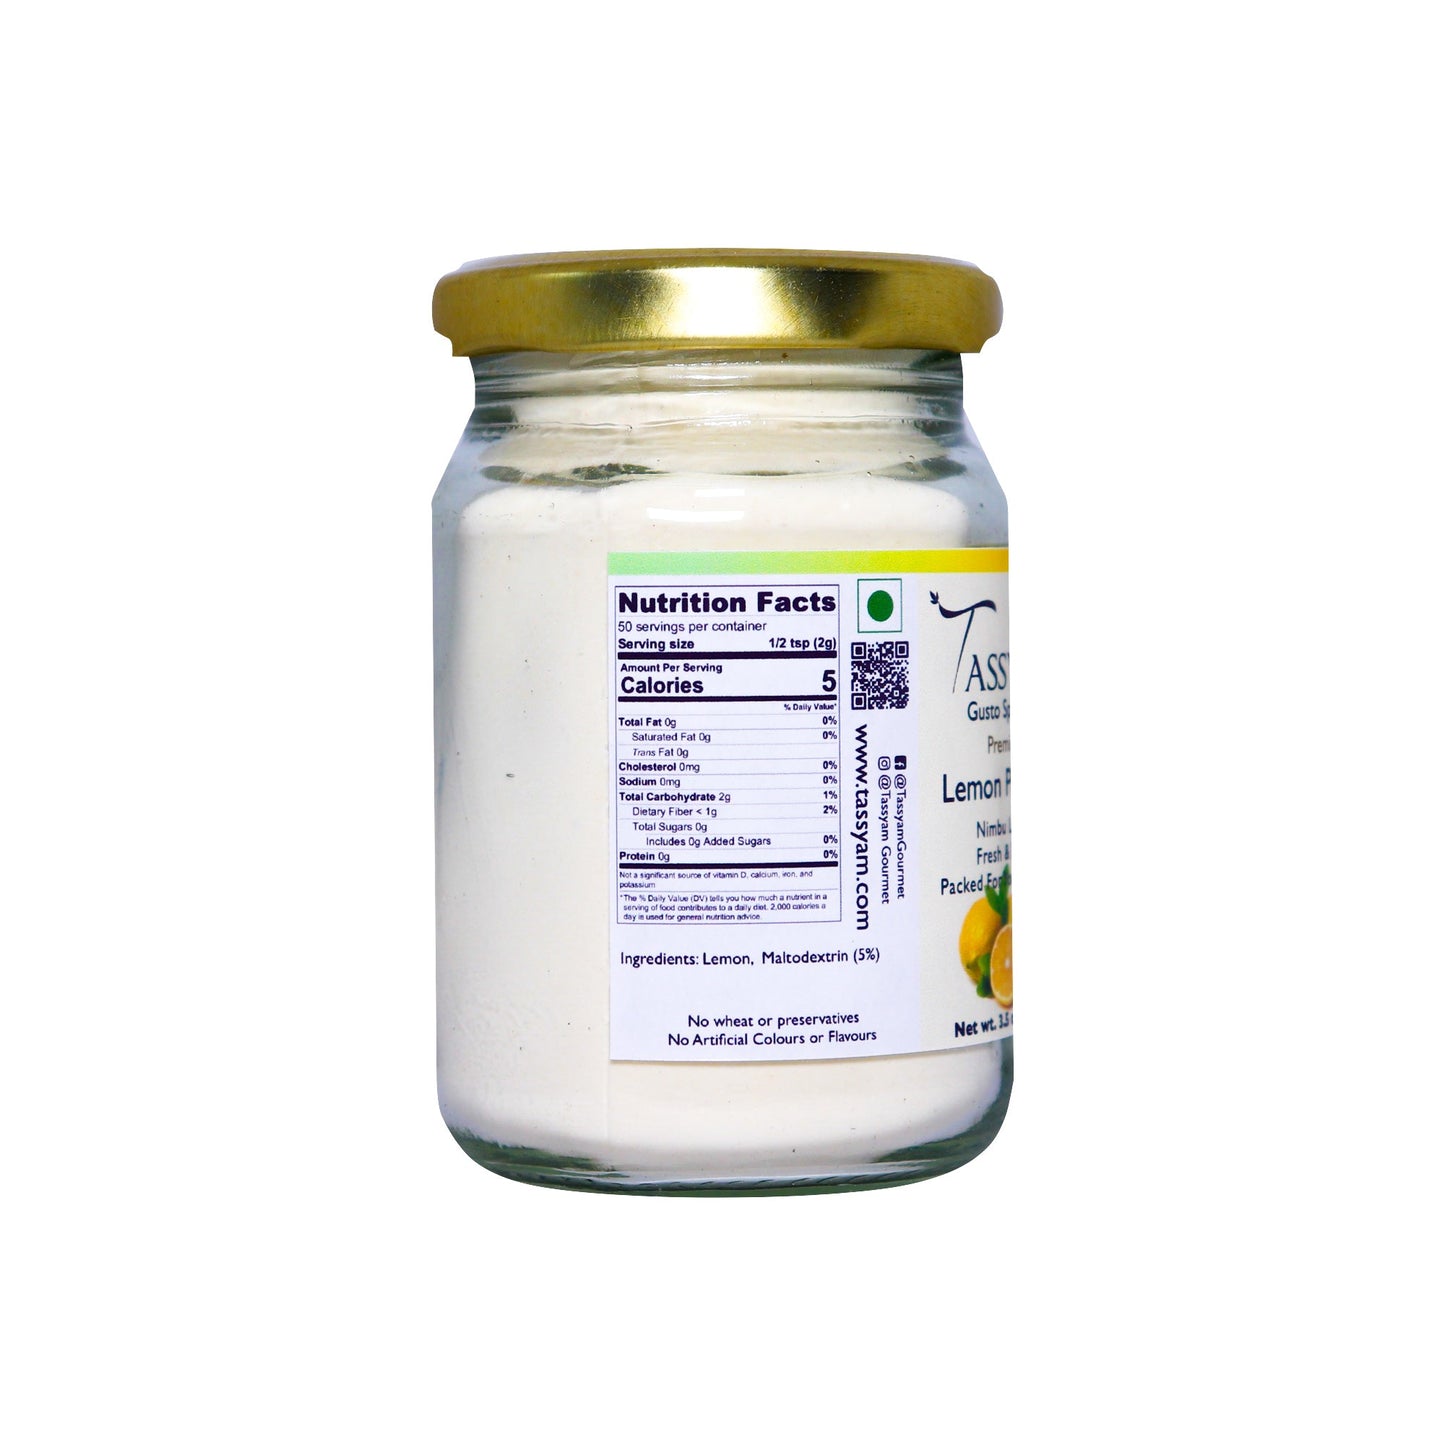 Lemon Powder 100g Bottle - Tassyam Organics